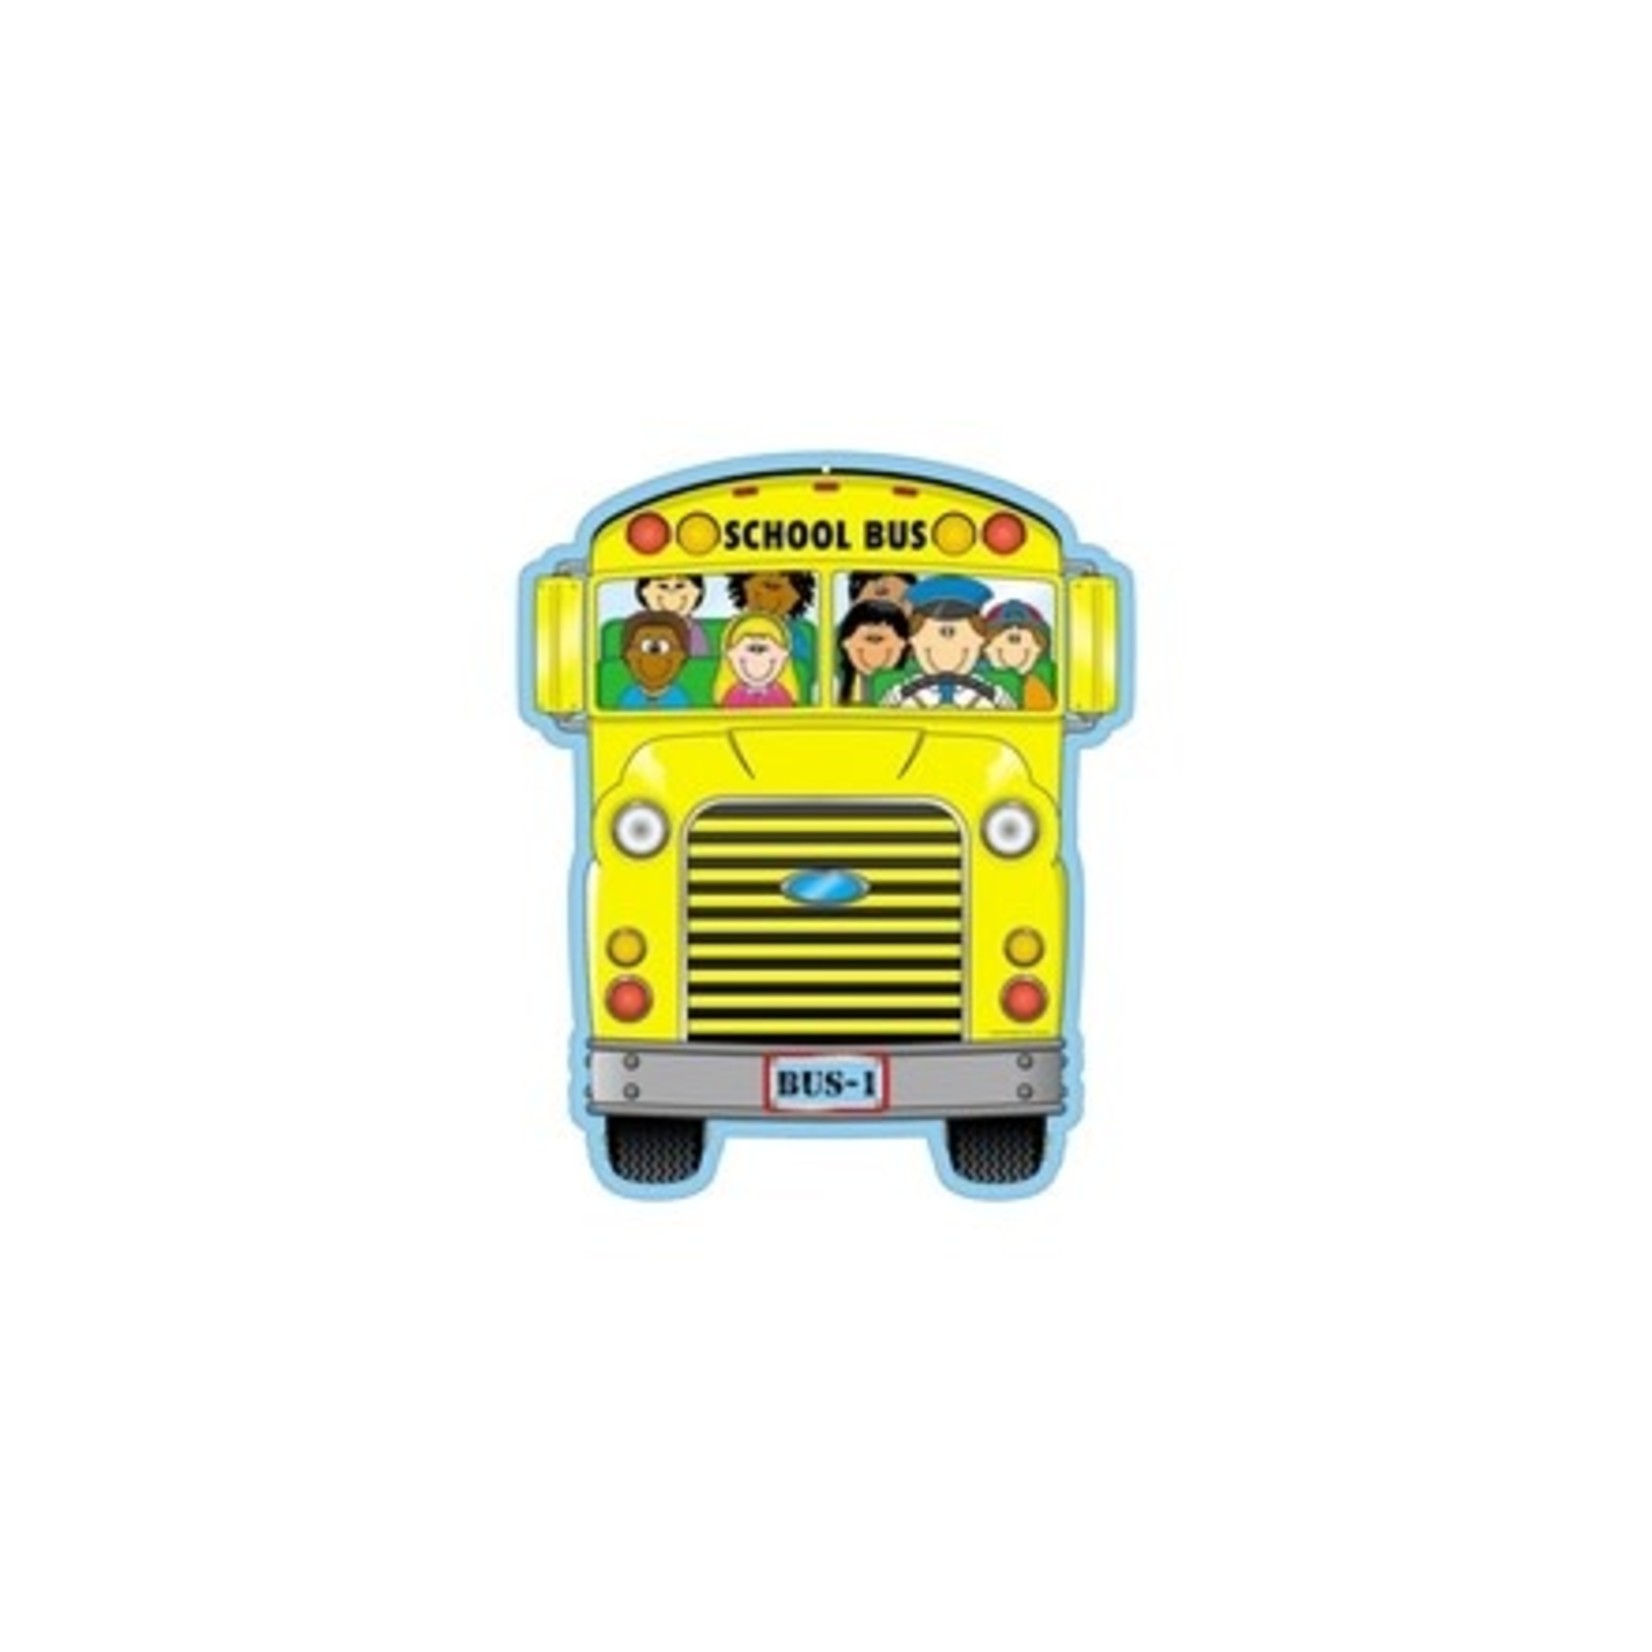 CARSON DELLOSA PUBLISHING CO School Bus Two-Sided Decoration